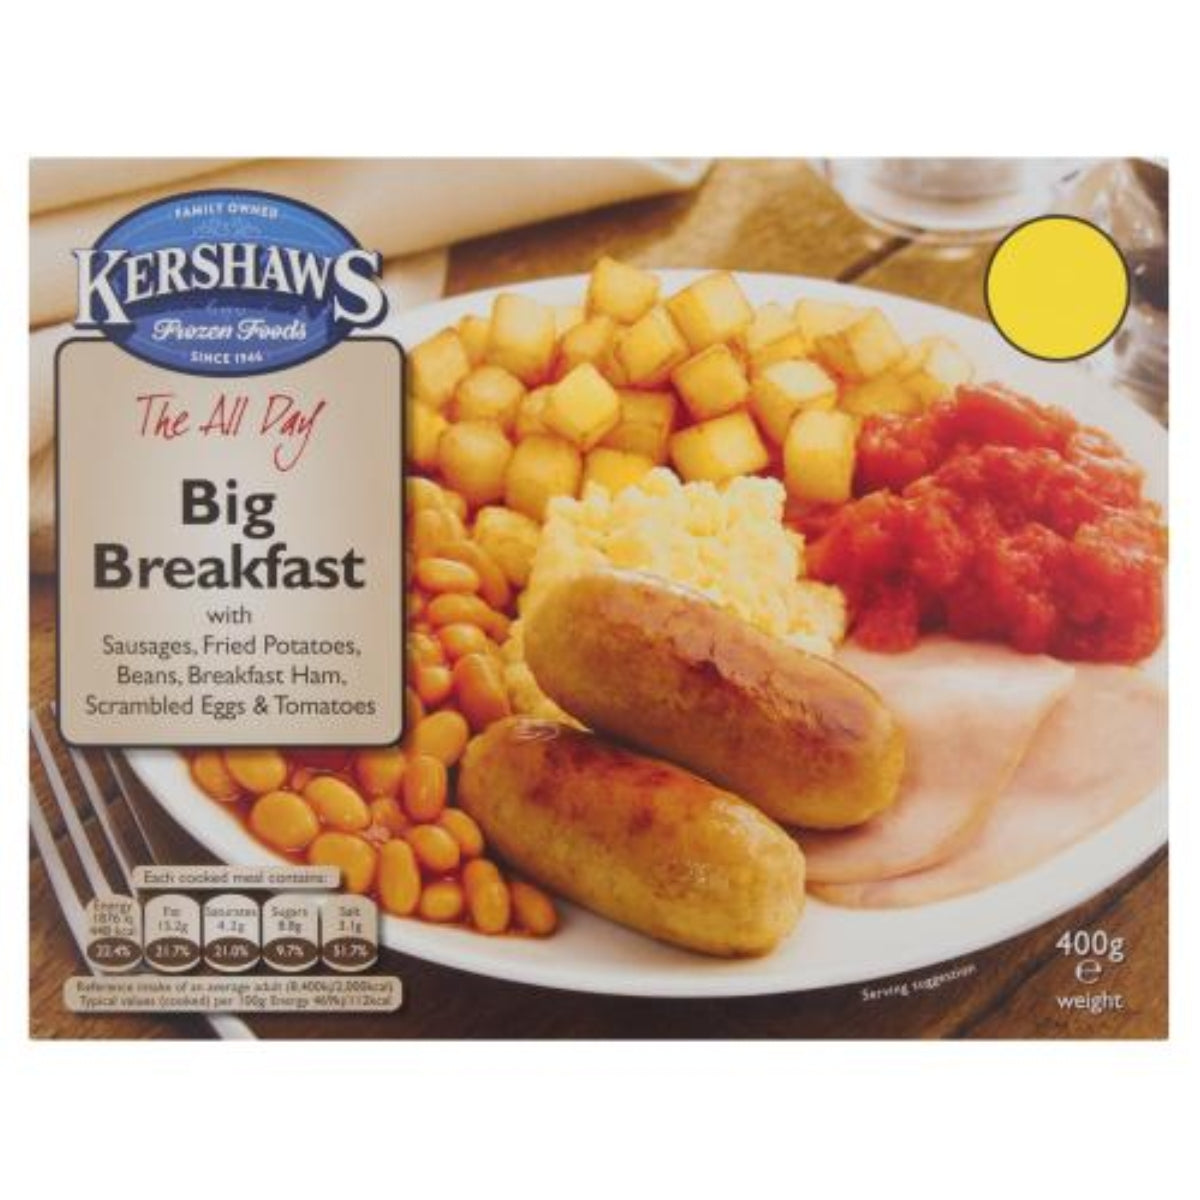 A box of Kershaws - Big Breakfast - 400g.